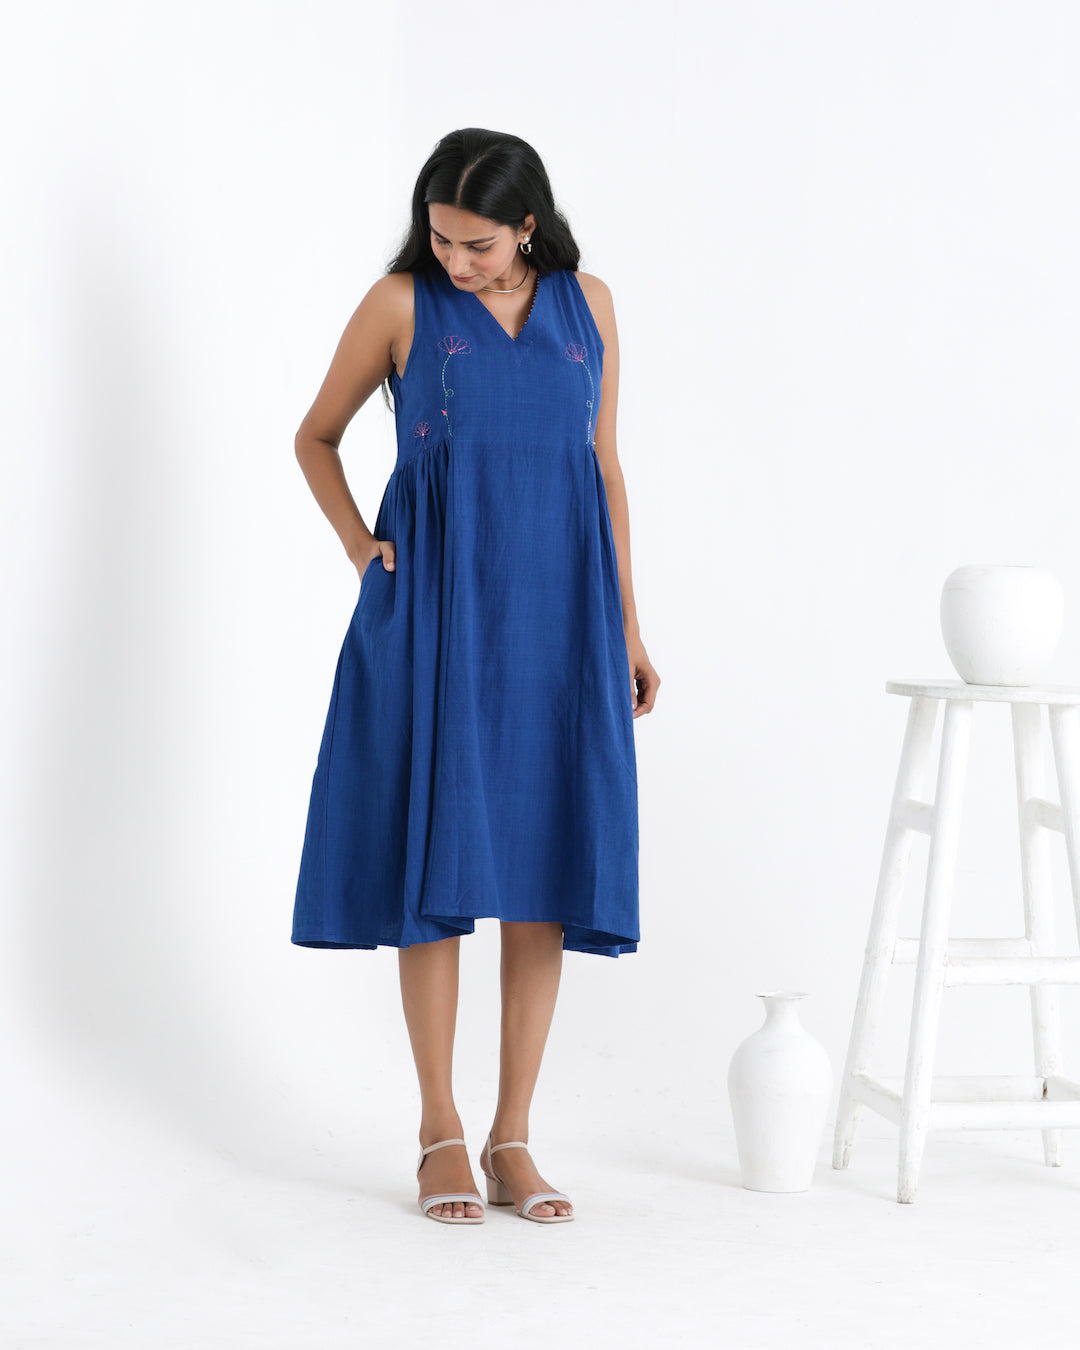 Shop blue embroidered dress from Bebaak